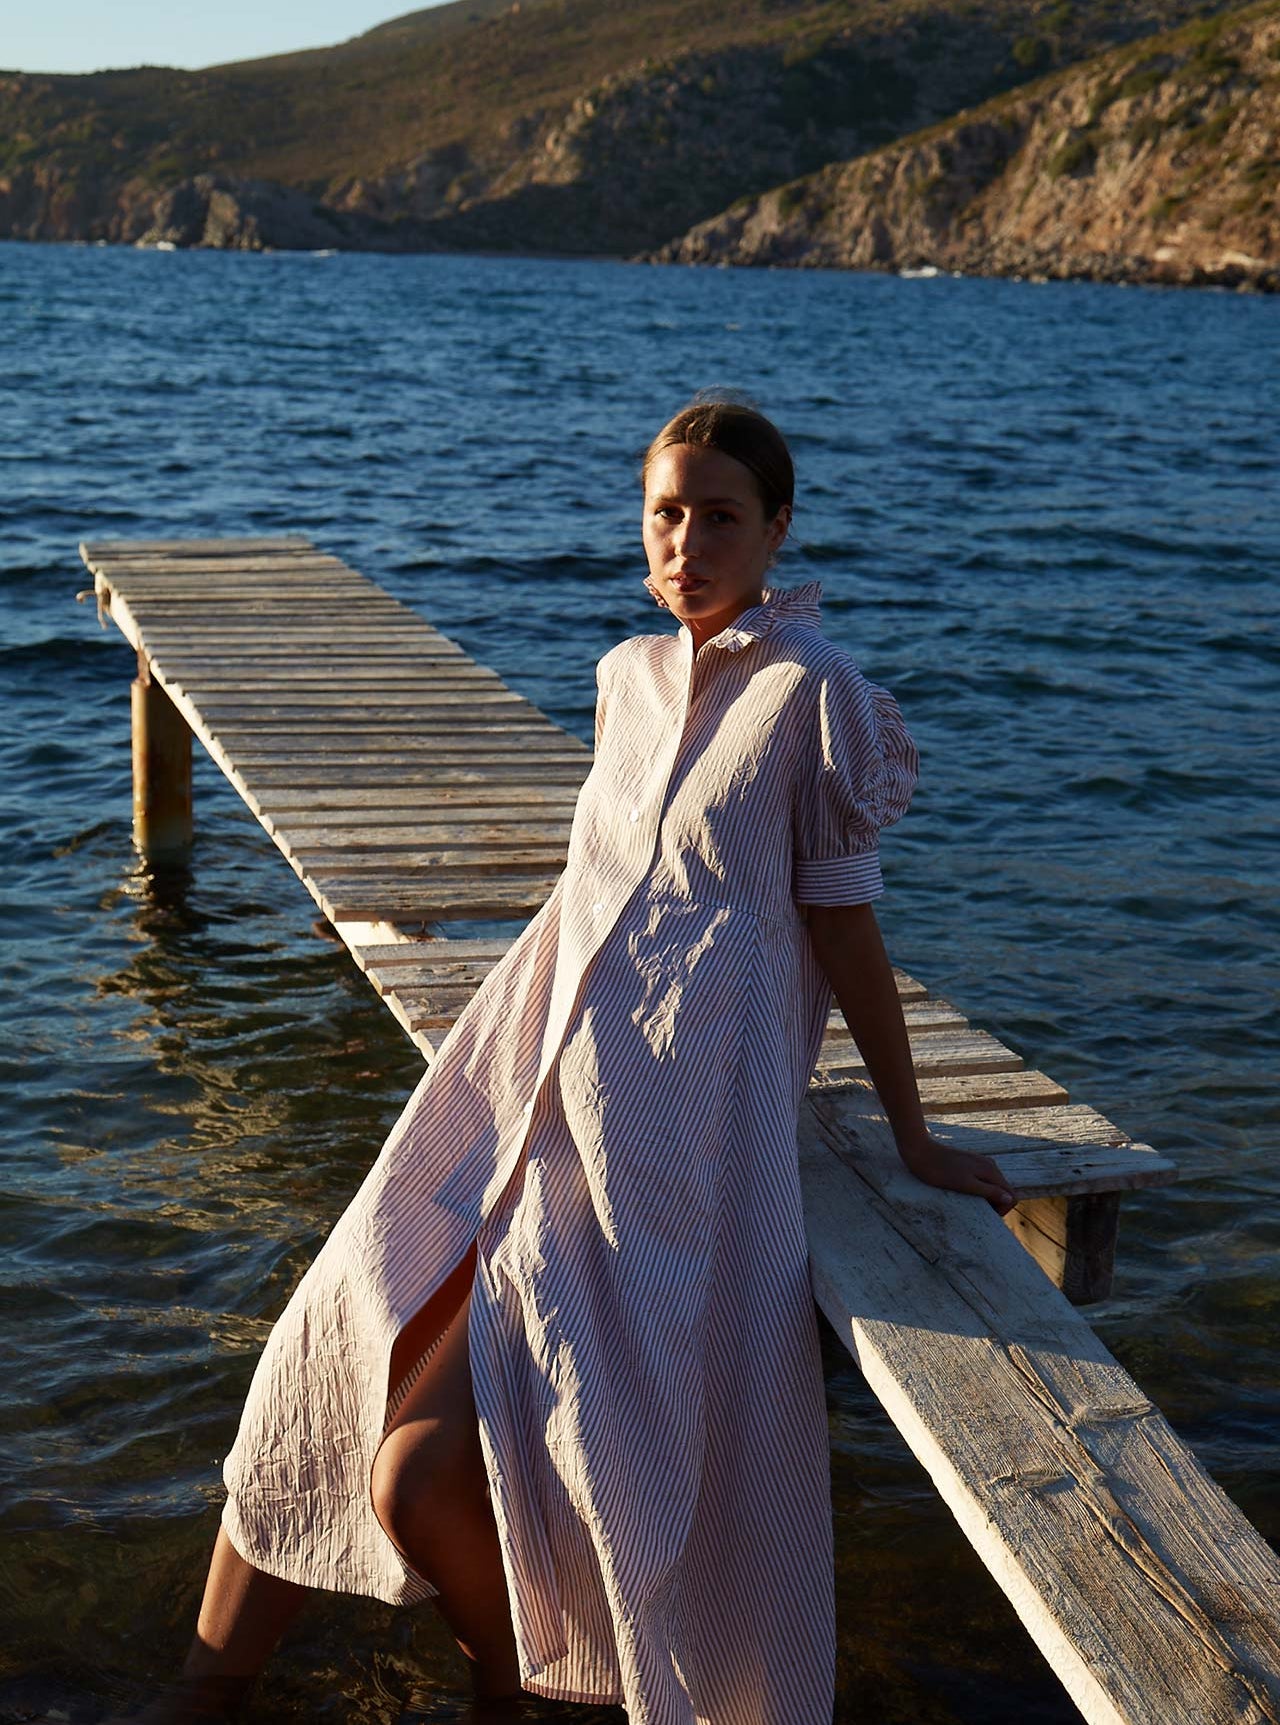 An image of the Venetia dress from the lookbook photographed by Stéphane Gautronneau